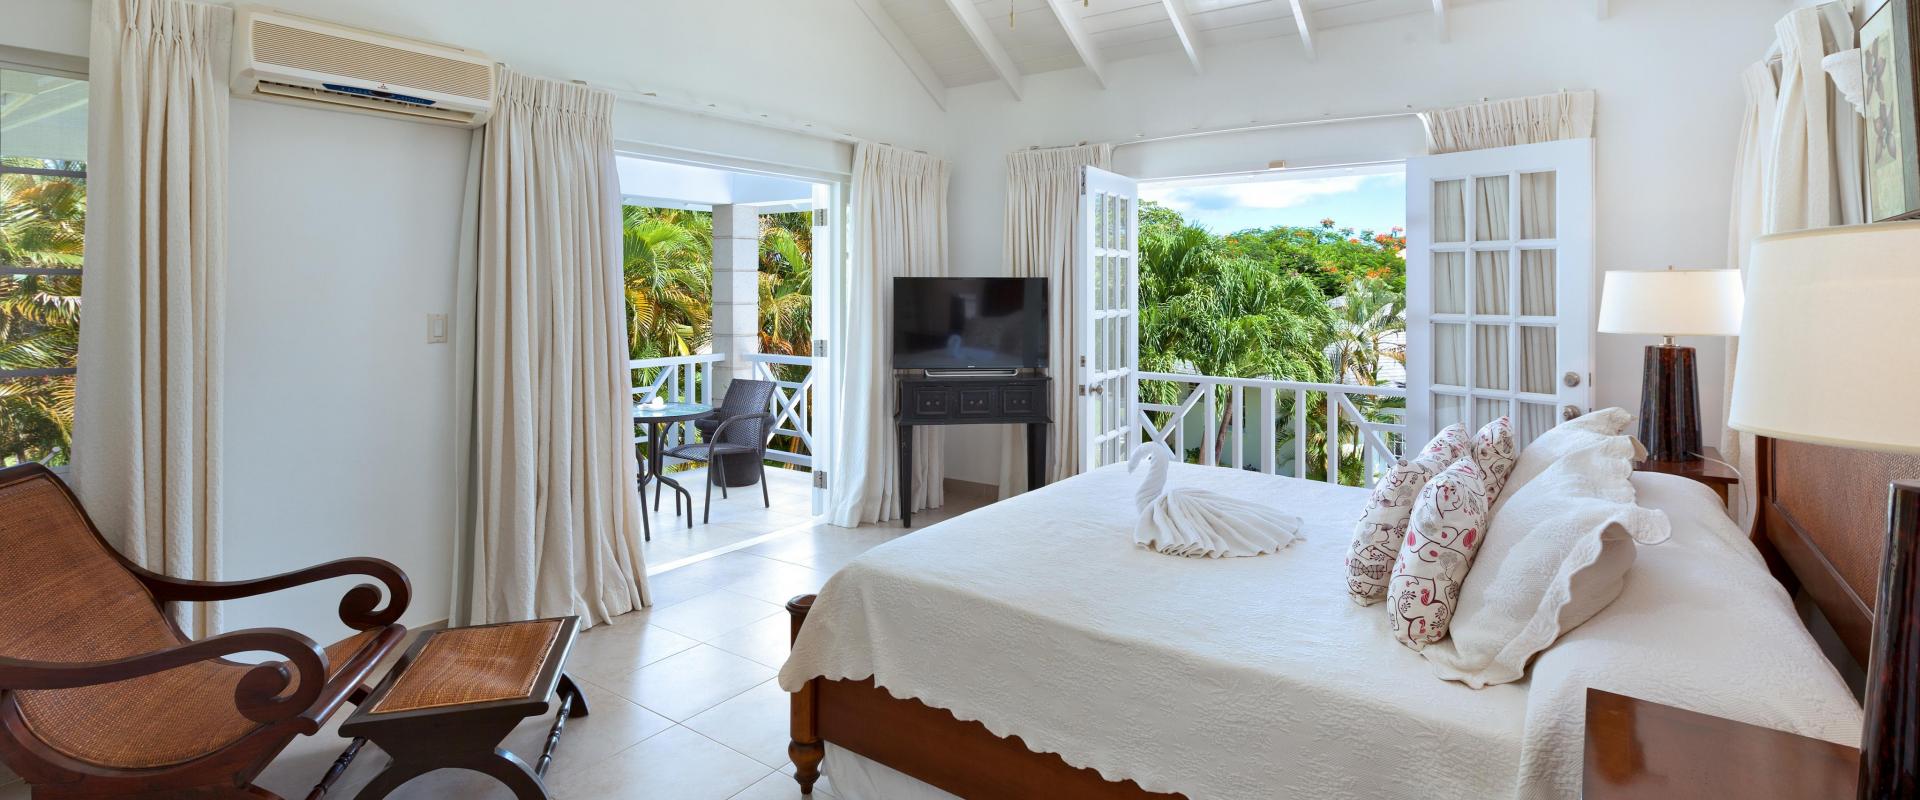 Barbados Holiday Rental Rose Of Sharon Sandy Lane Bedroom 2